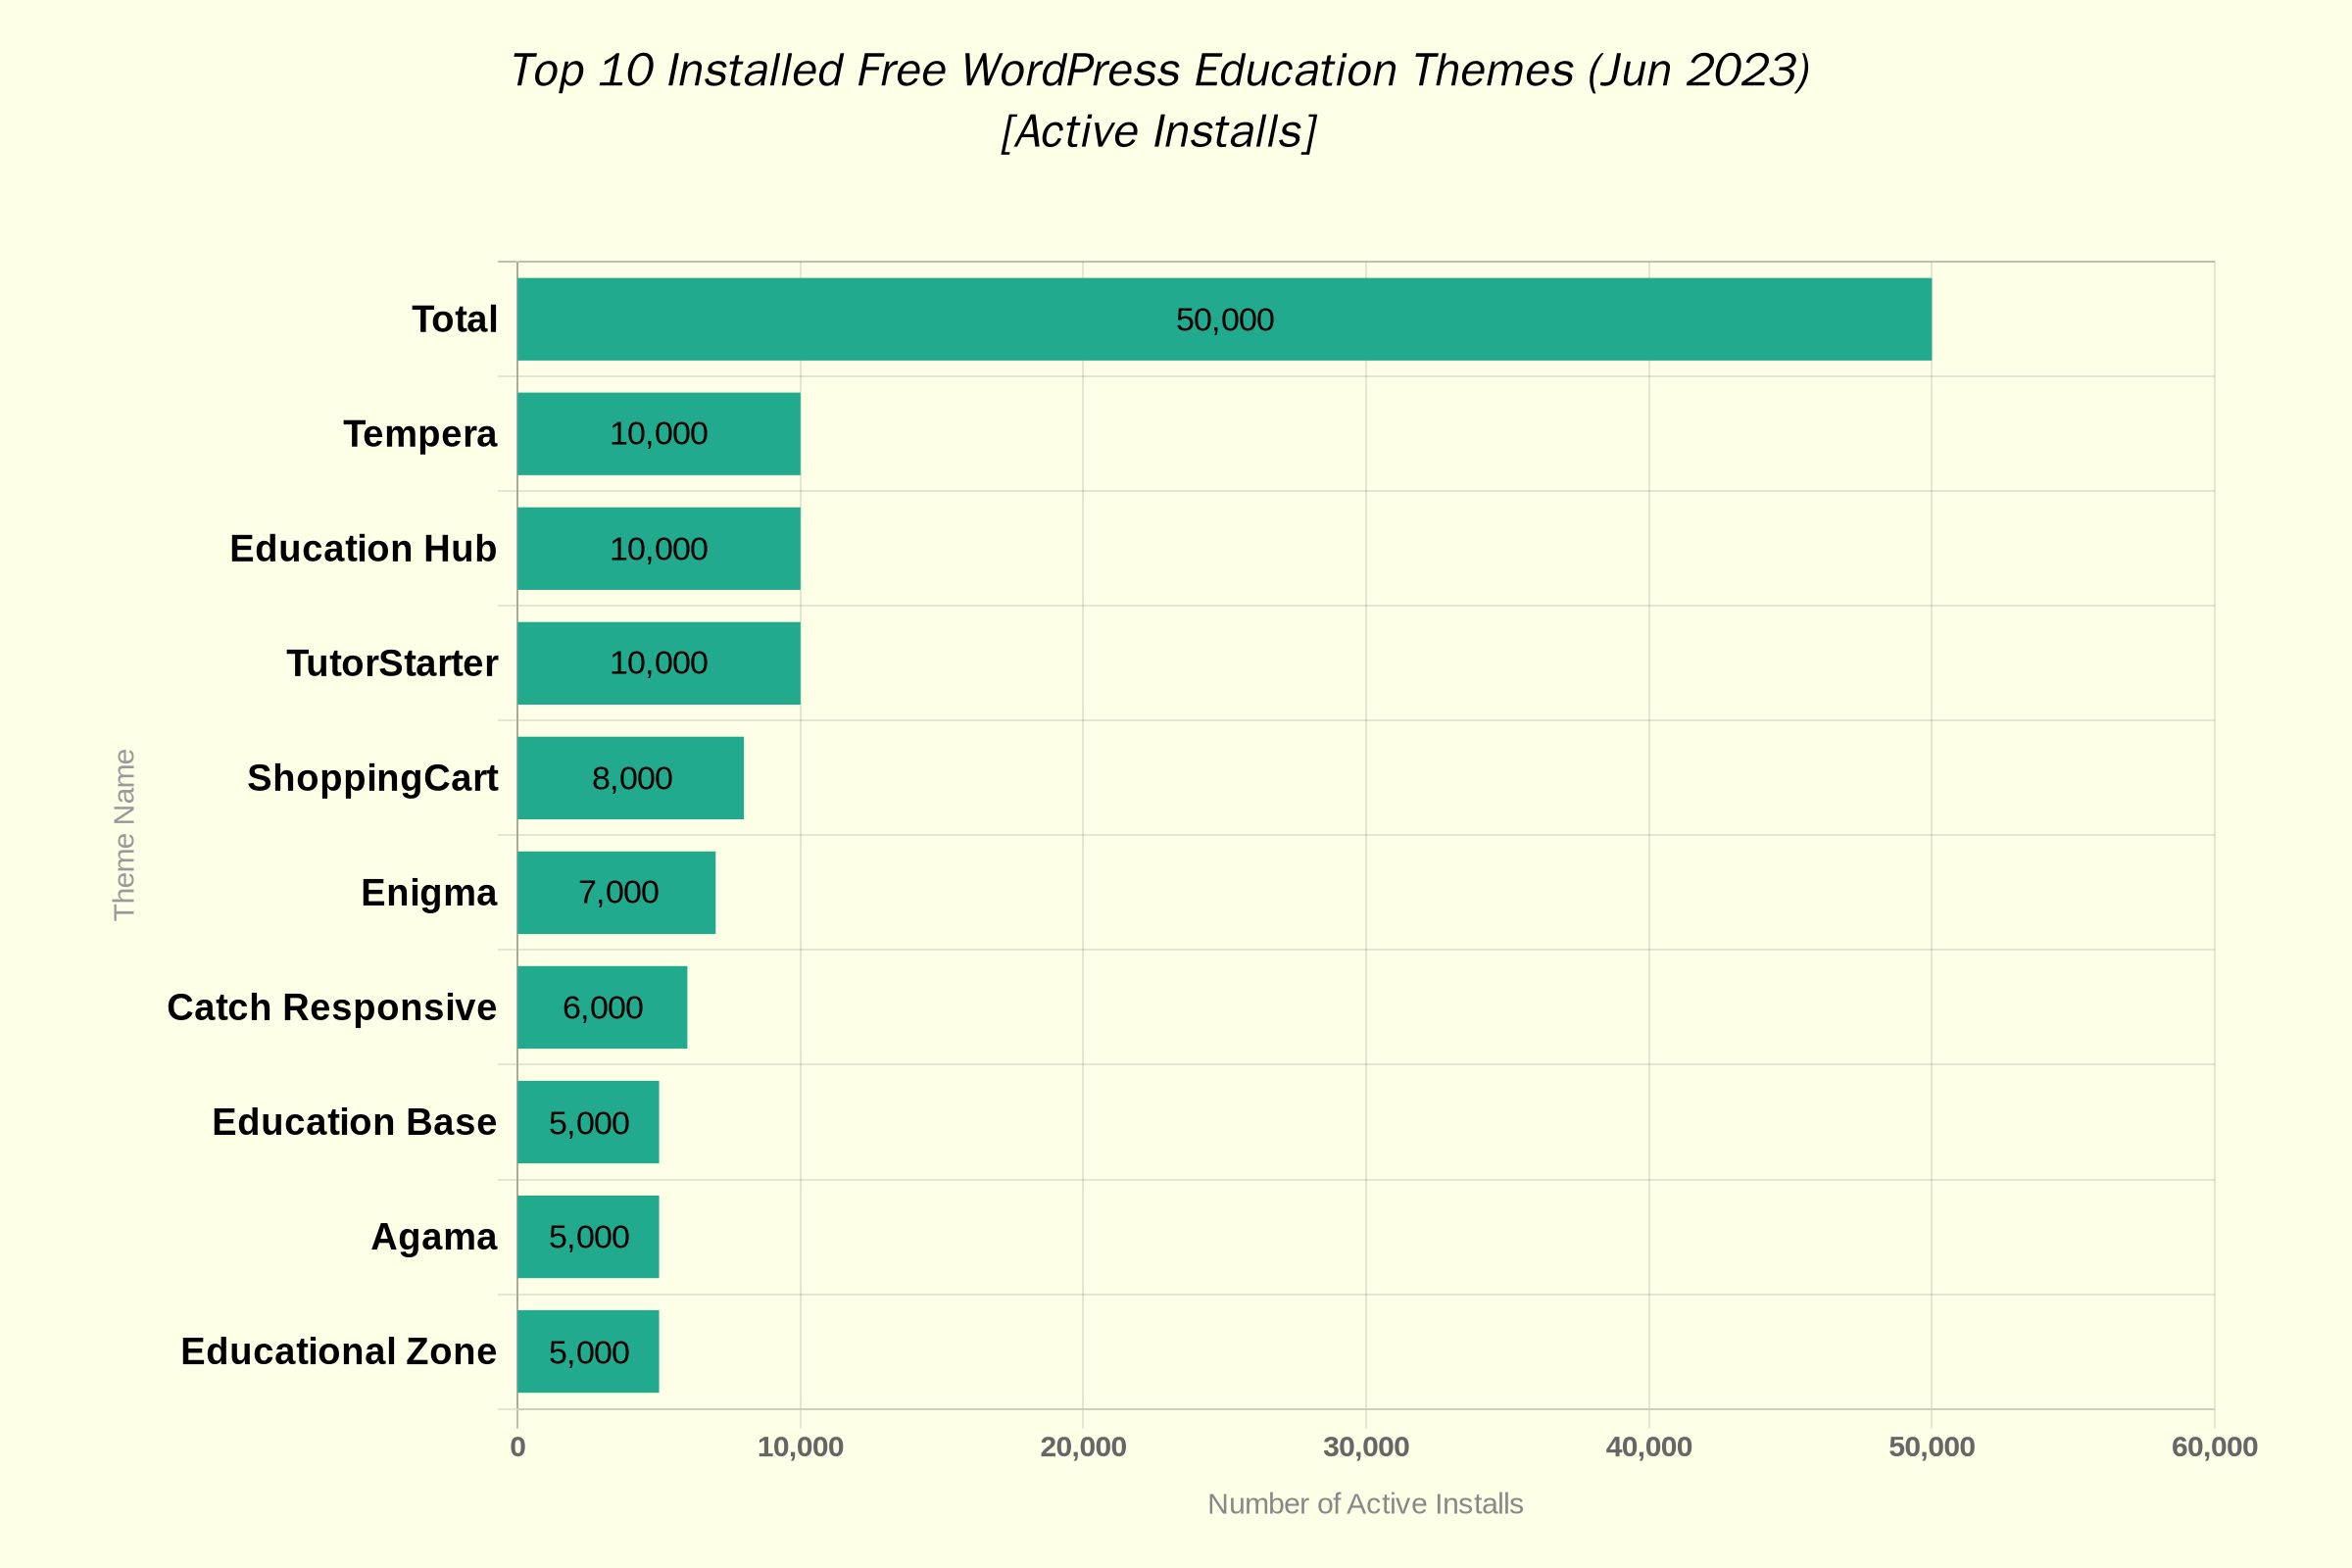 Top 10 installed free WordPress education themes